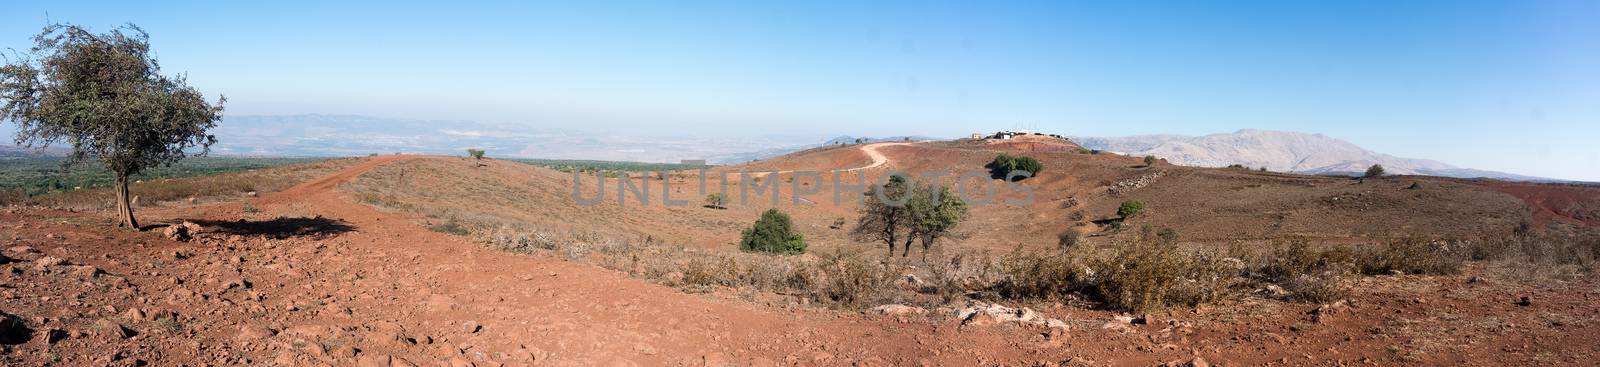 Trekking in israeli north near syrian border